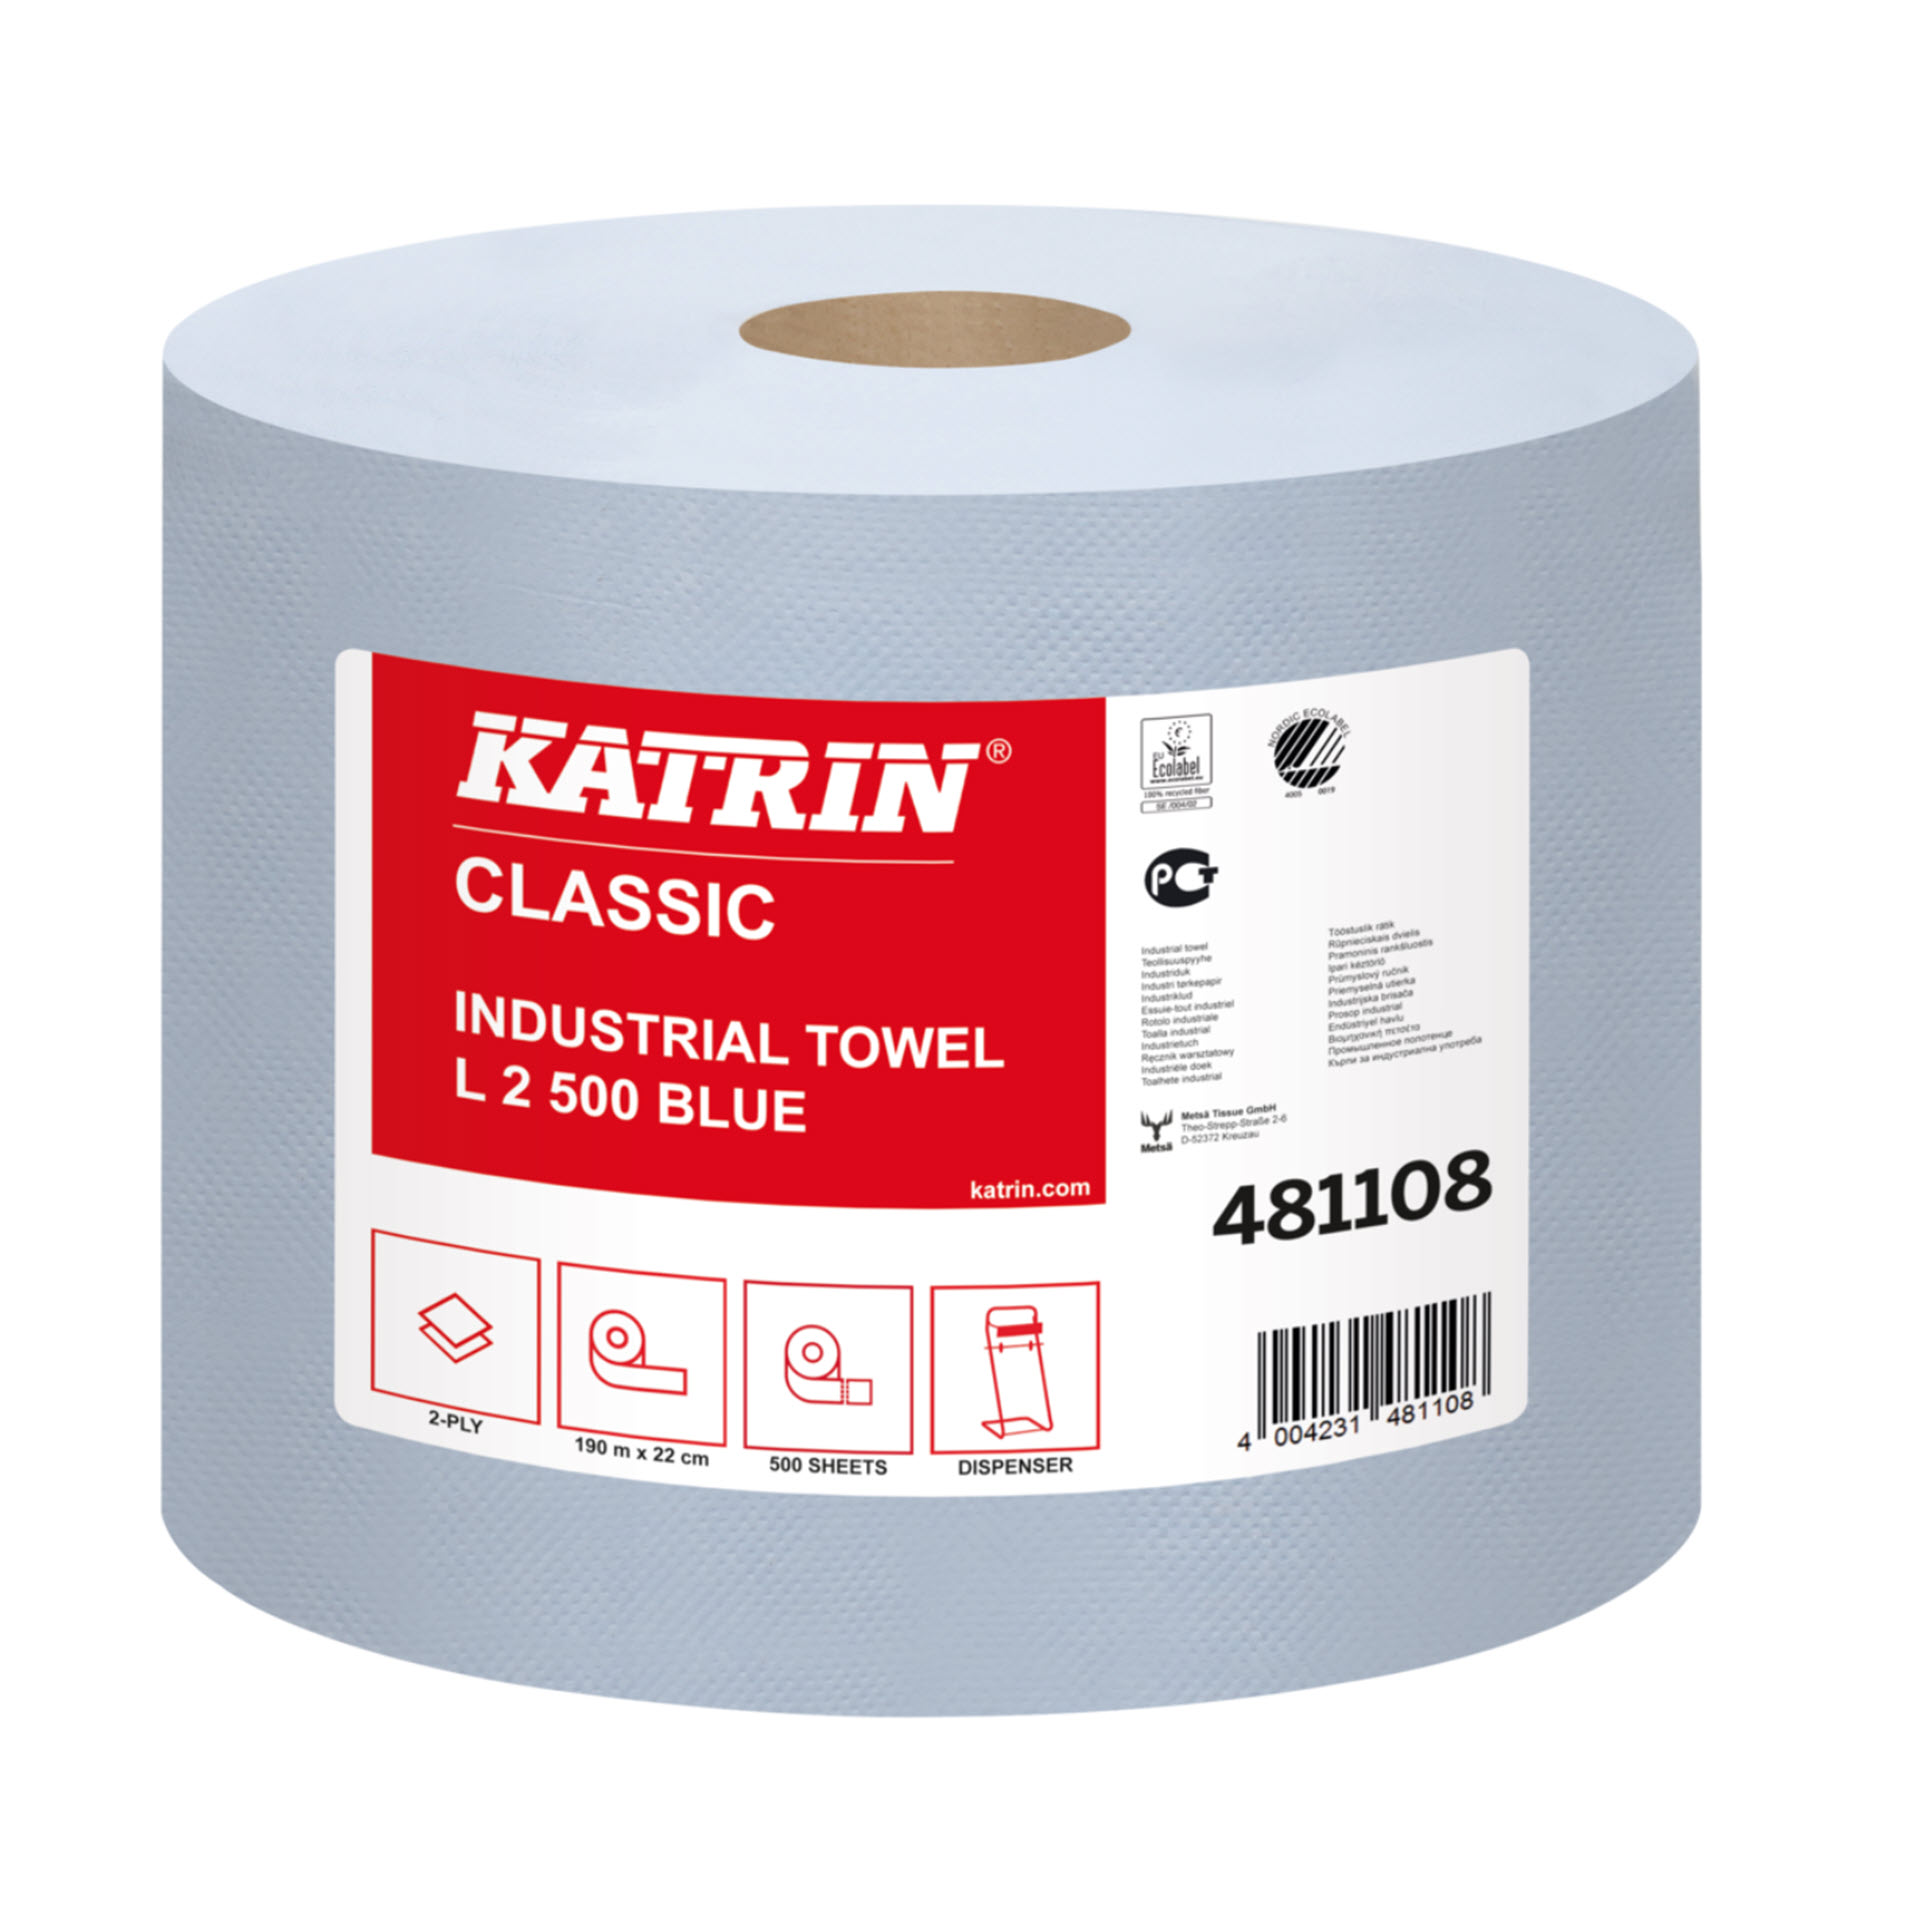 Katrin Classic Industrial Towel L2 Blue laminated - 481108 - Putztuch / Tissue-Wischtuch